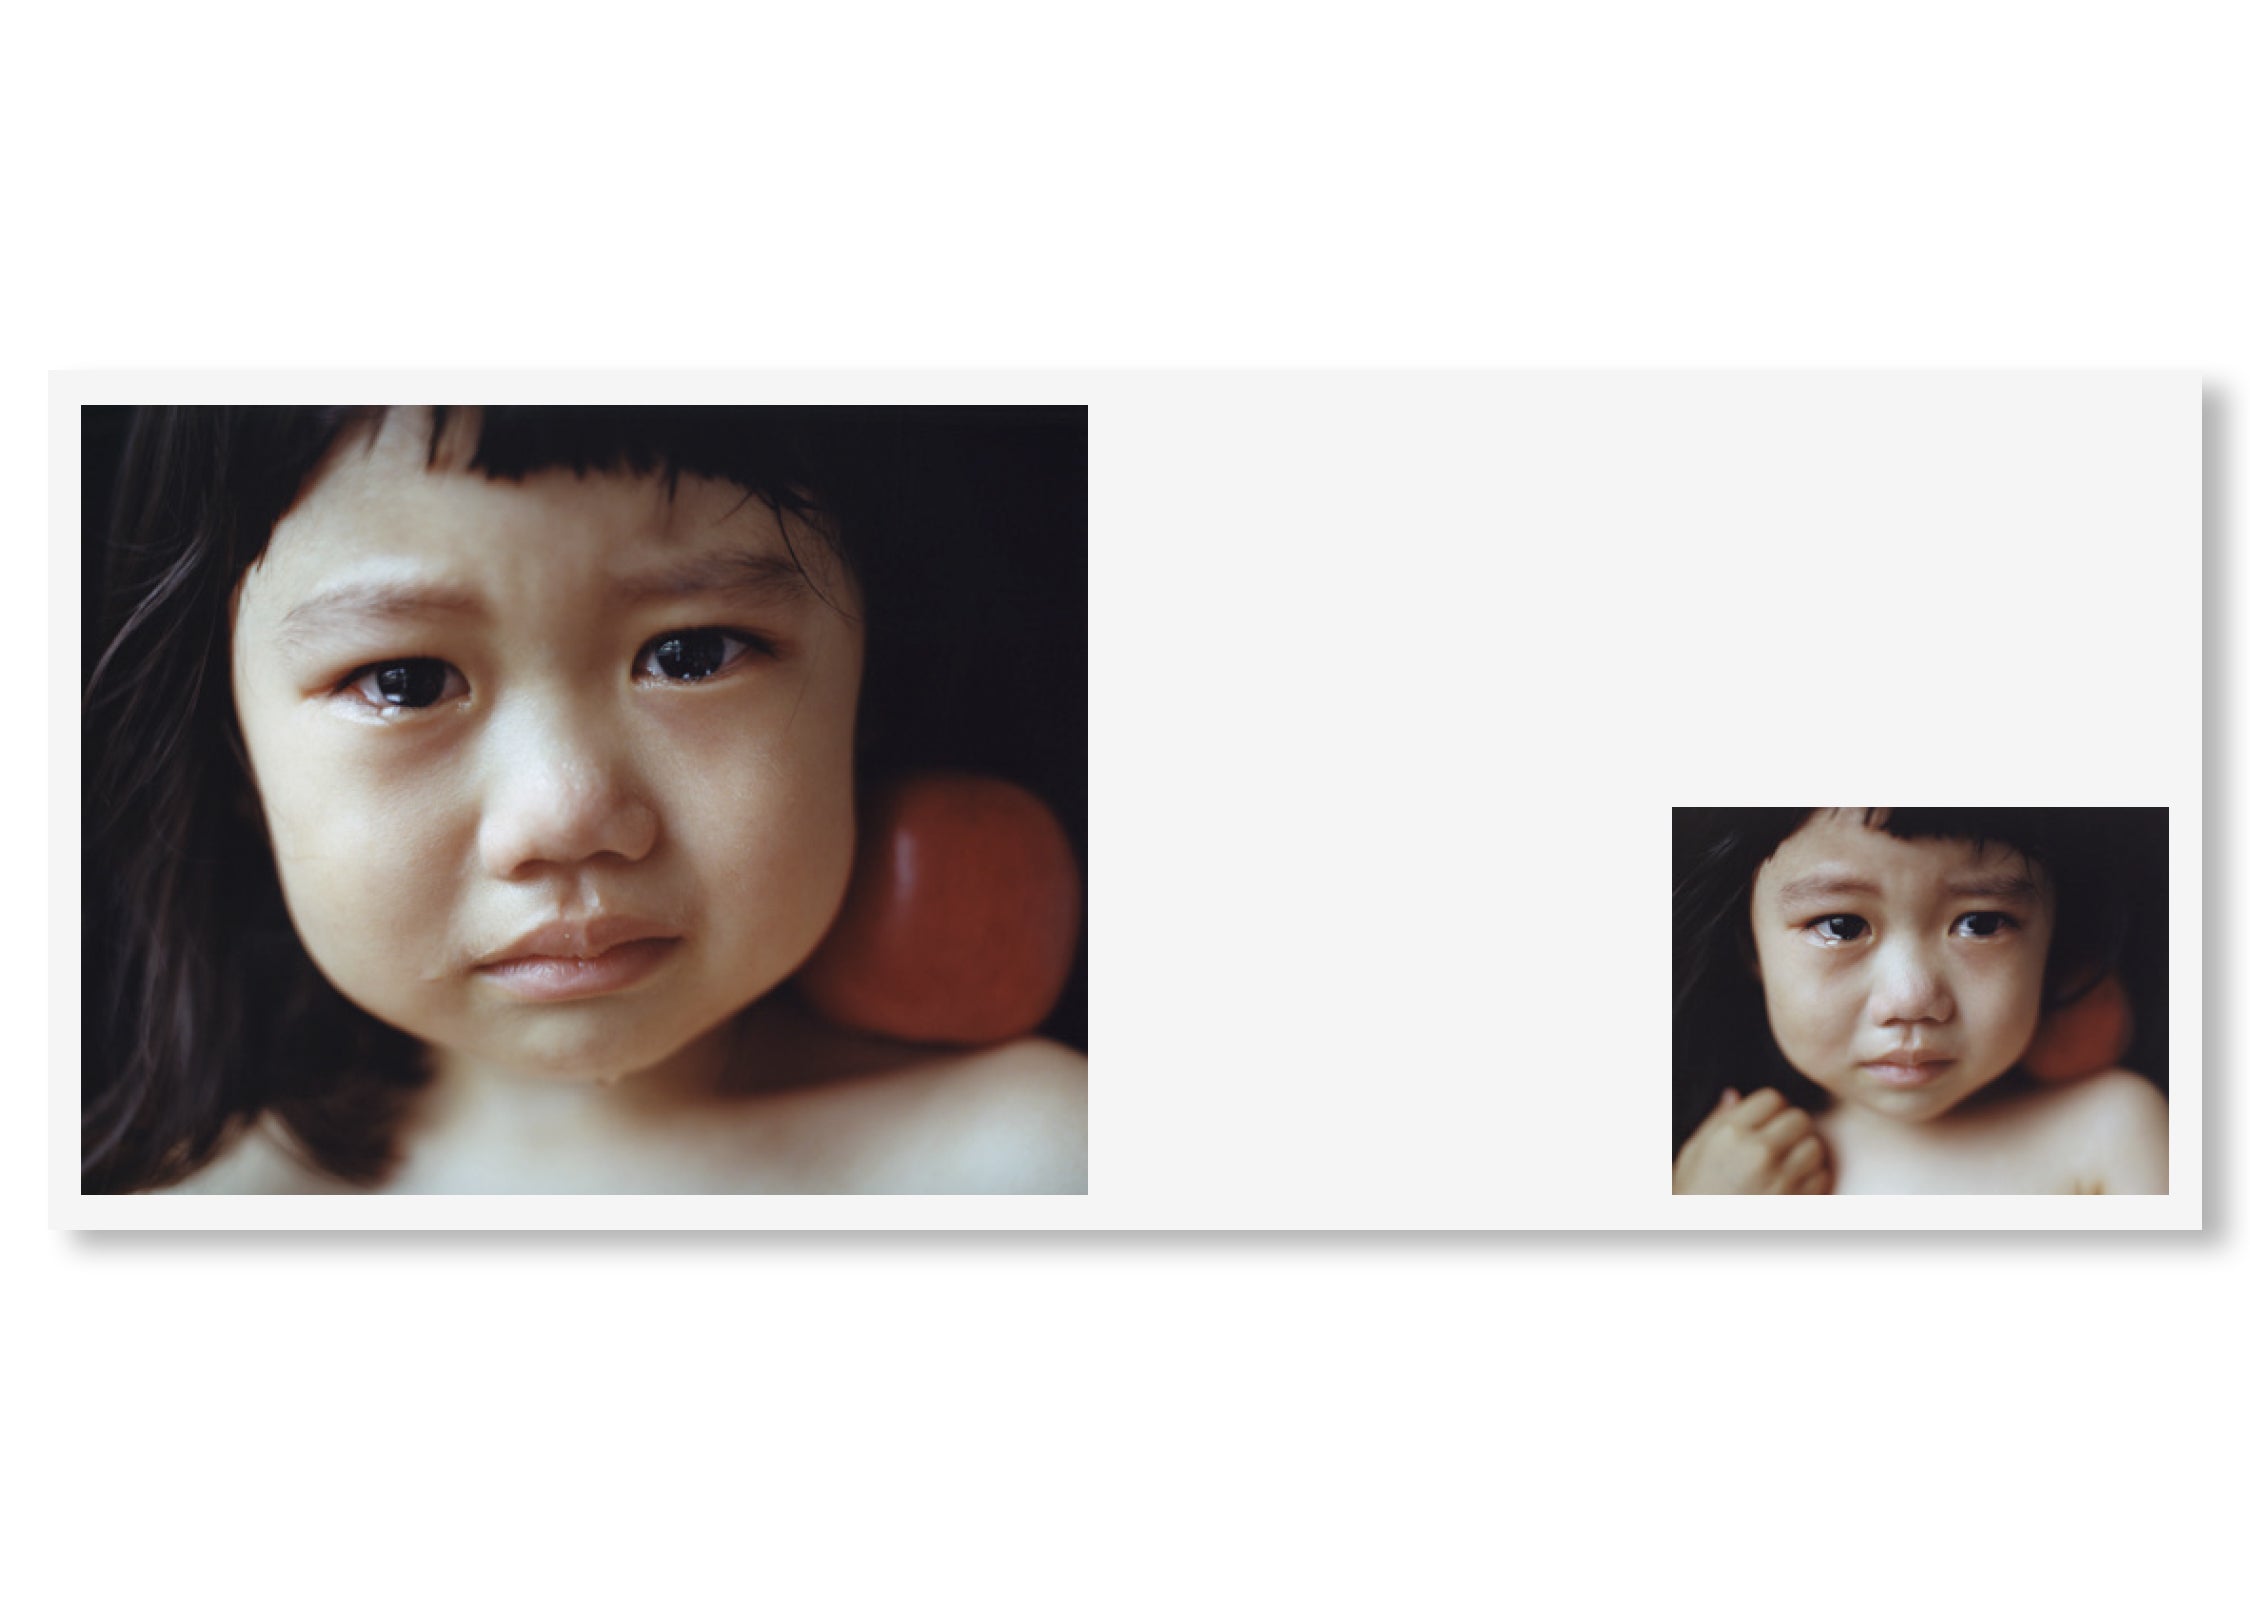 WILD CHILDREN by Osamu Yokonami